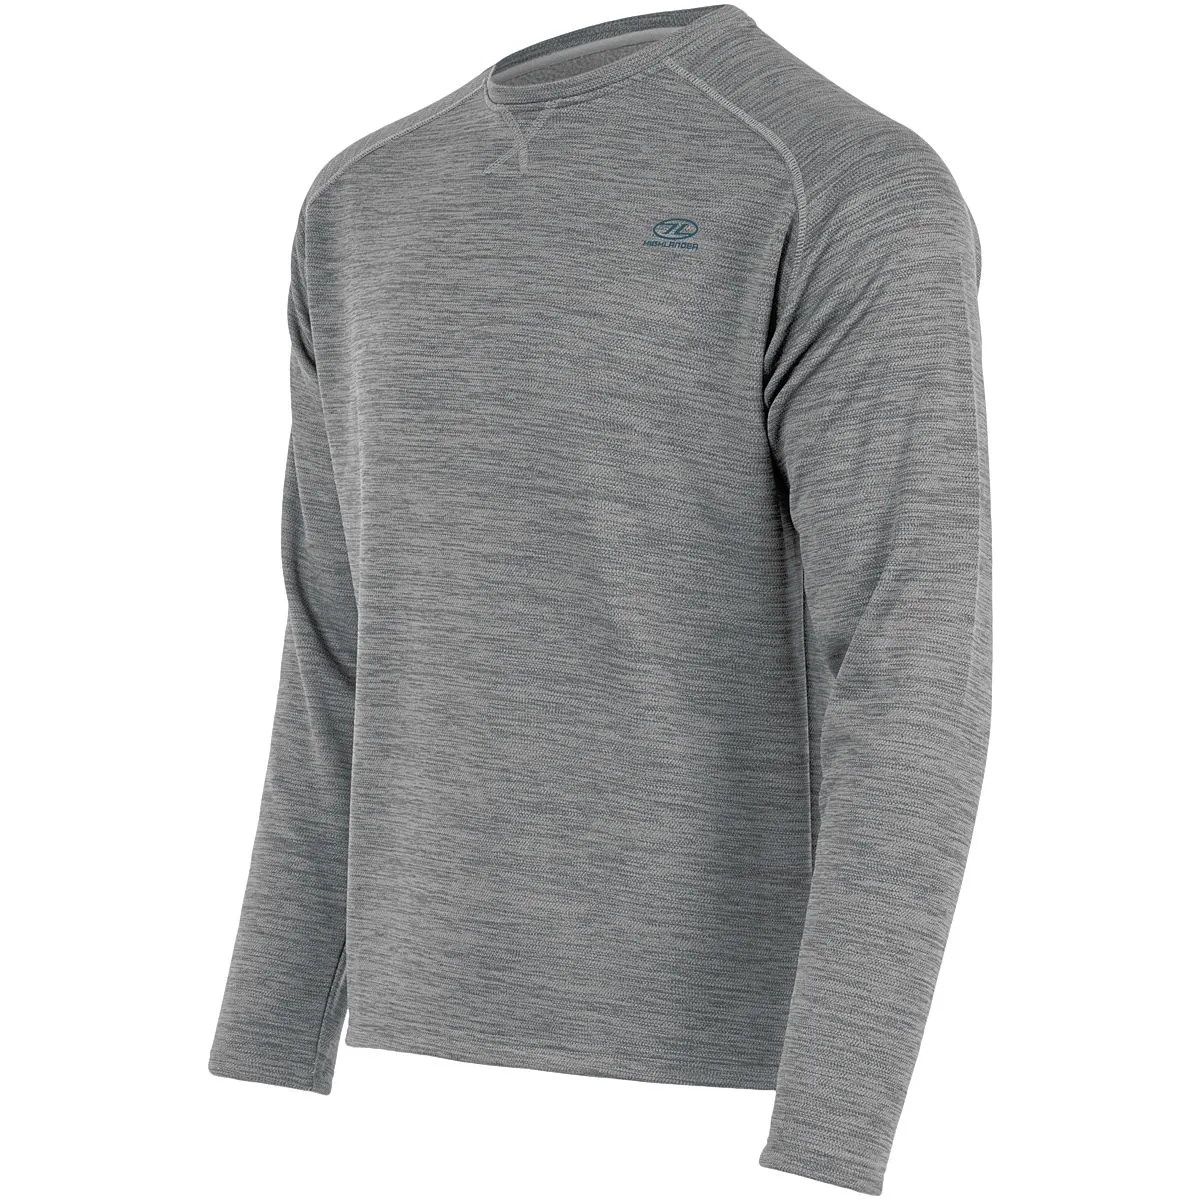 Highlander Crew Neck Sweater- Cool Grey